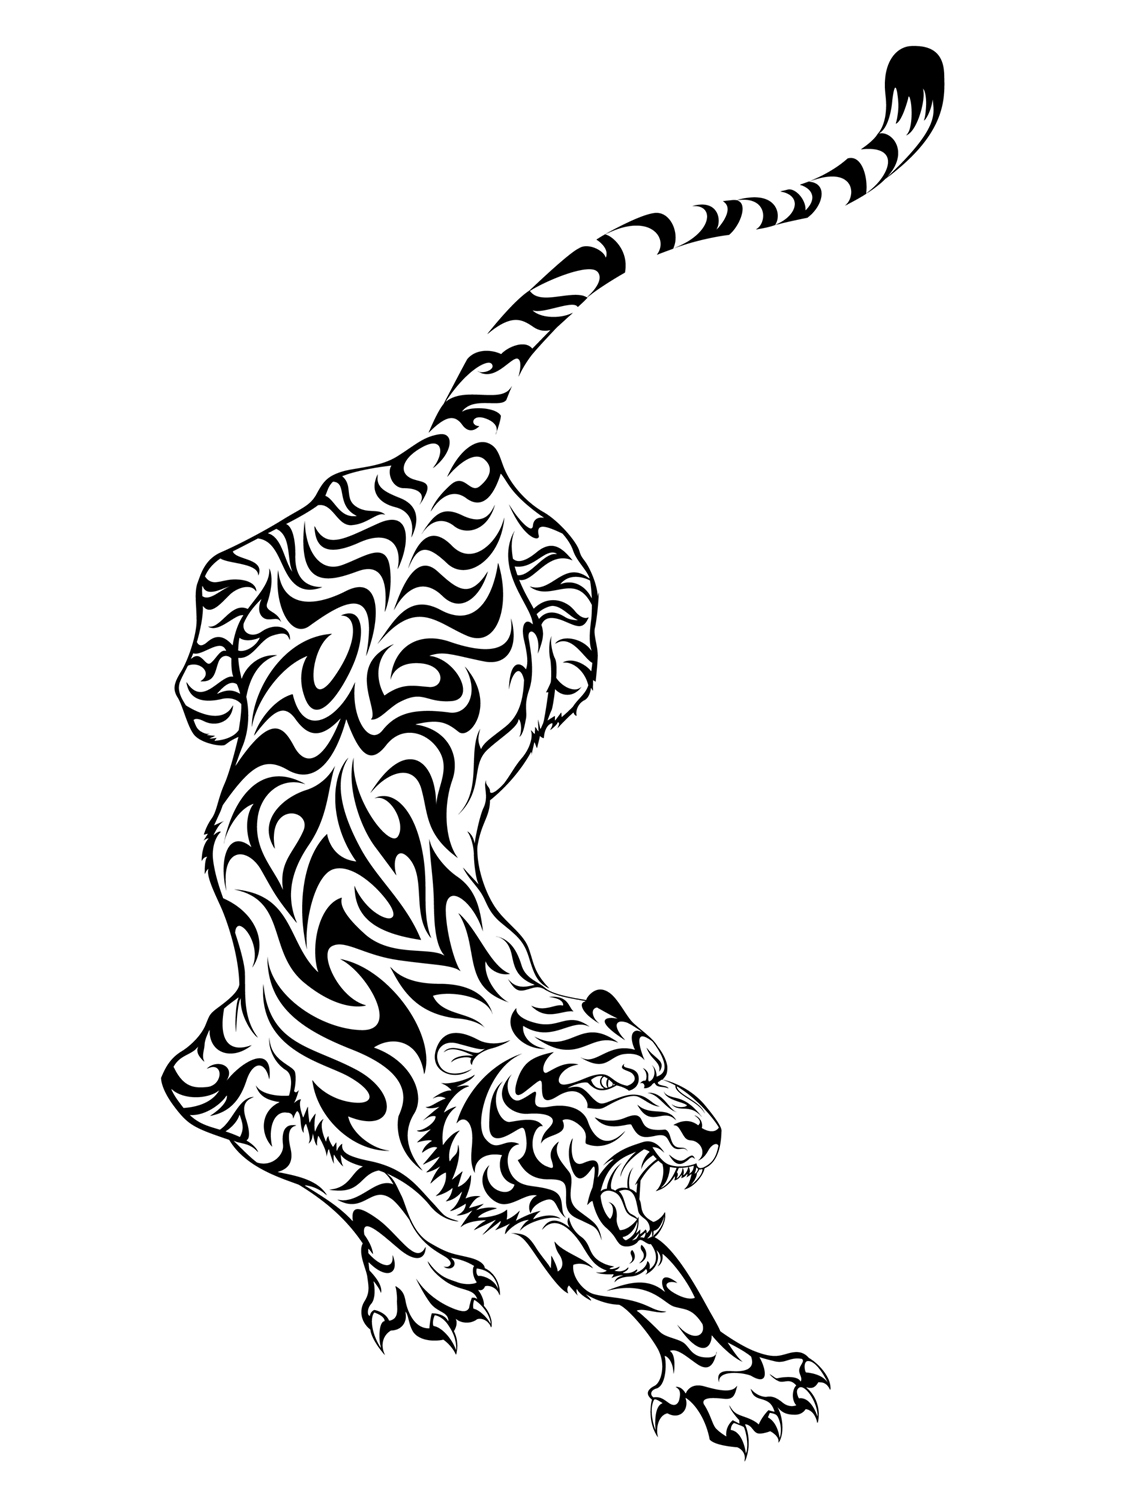 Эскиз татуировки трайбл тигр (Tribal Tiger)